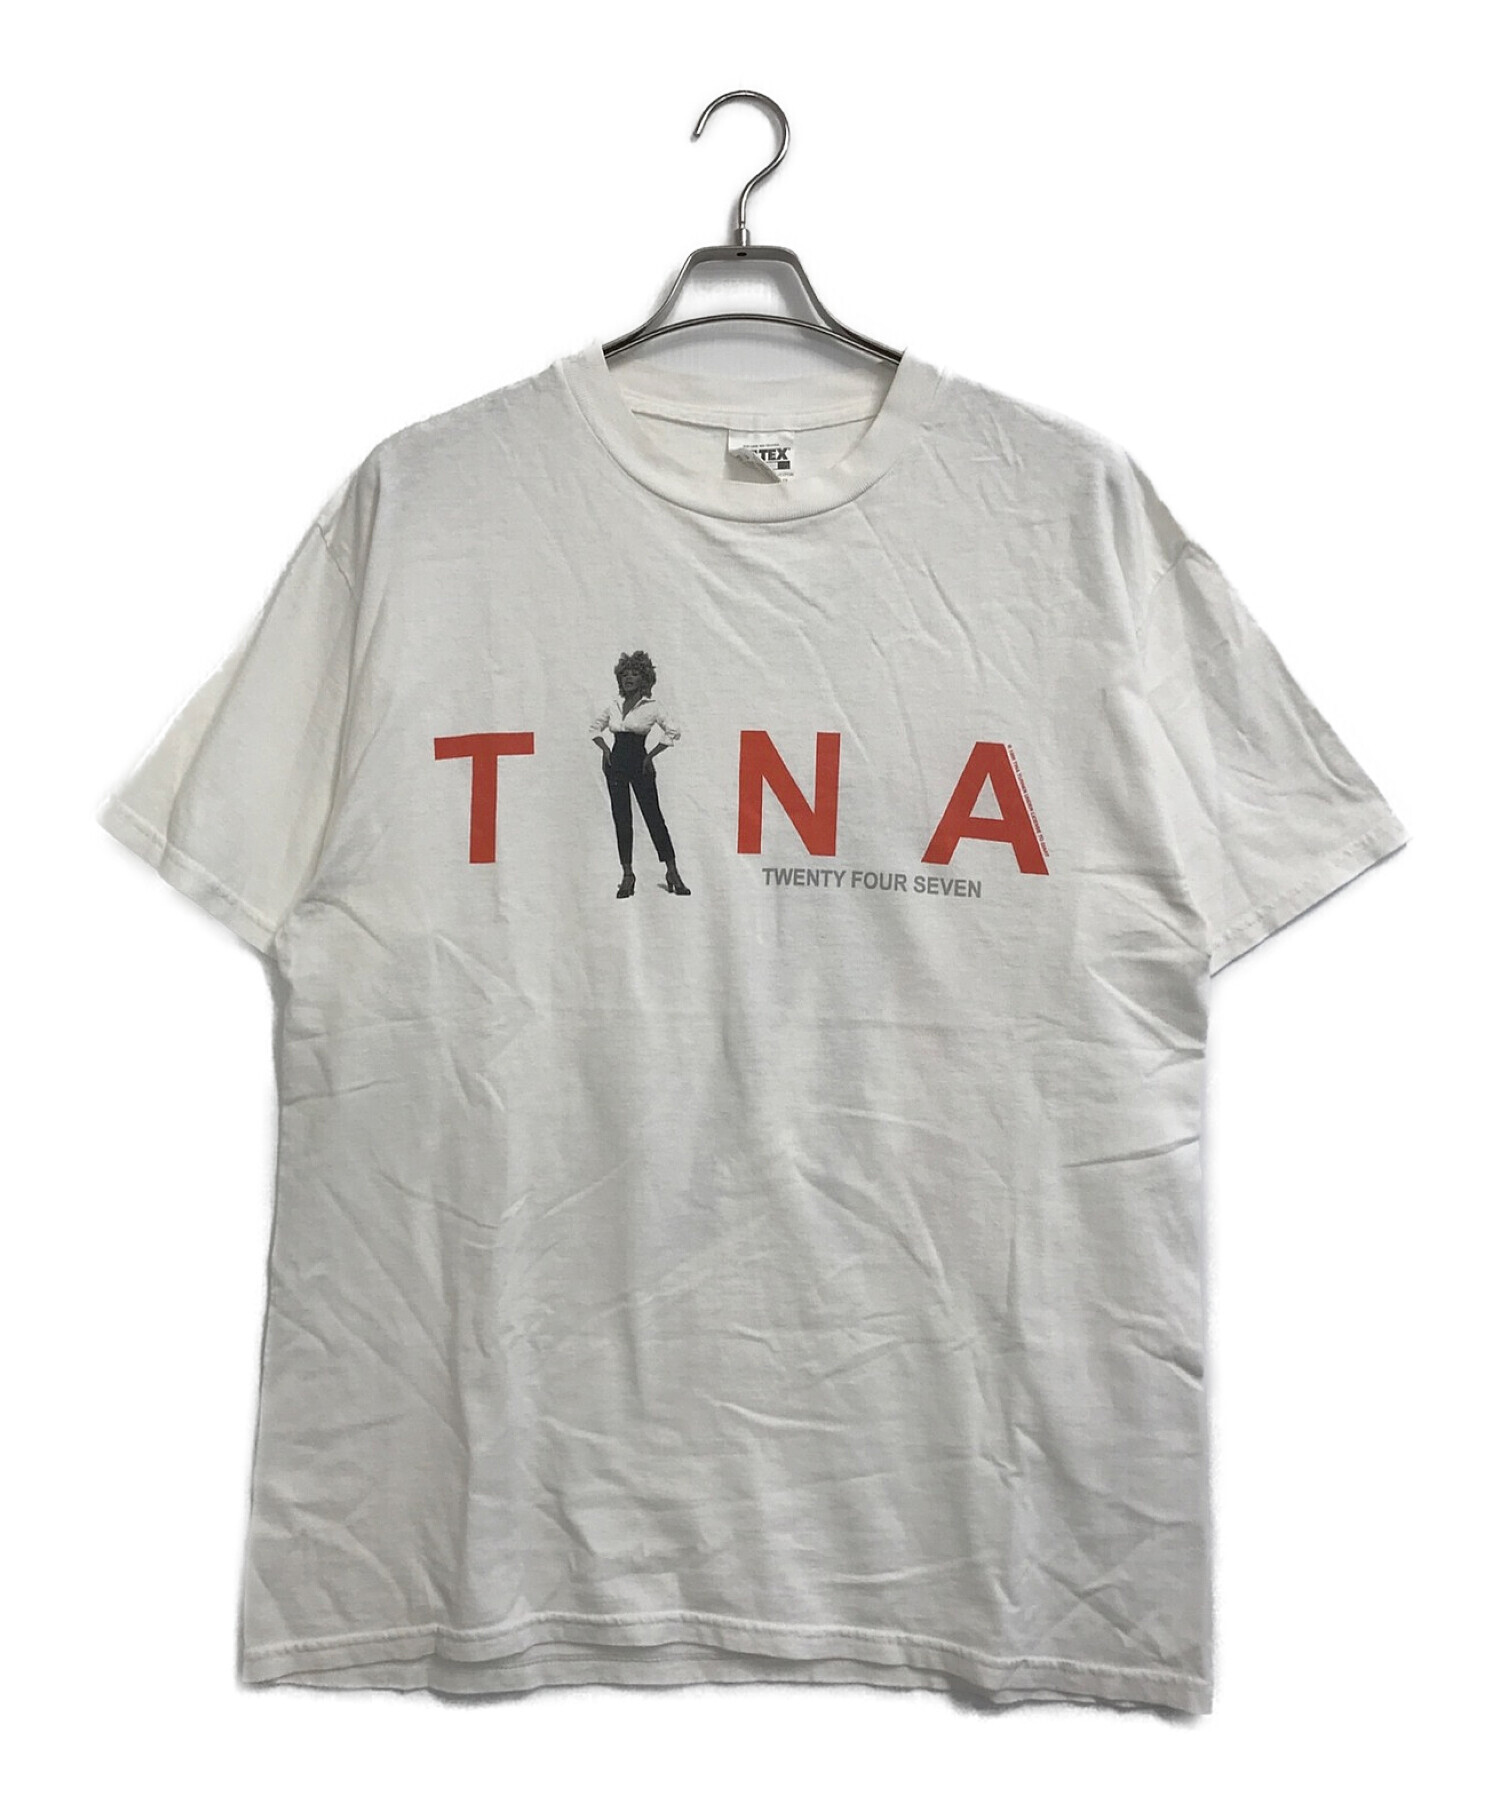 00s Tina Turner ティナターナー オフィシャル Tシャツ